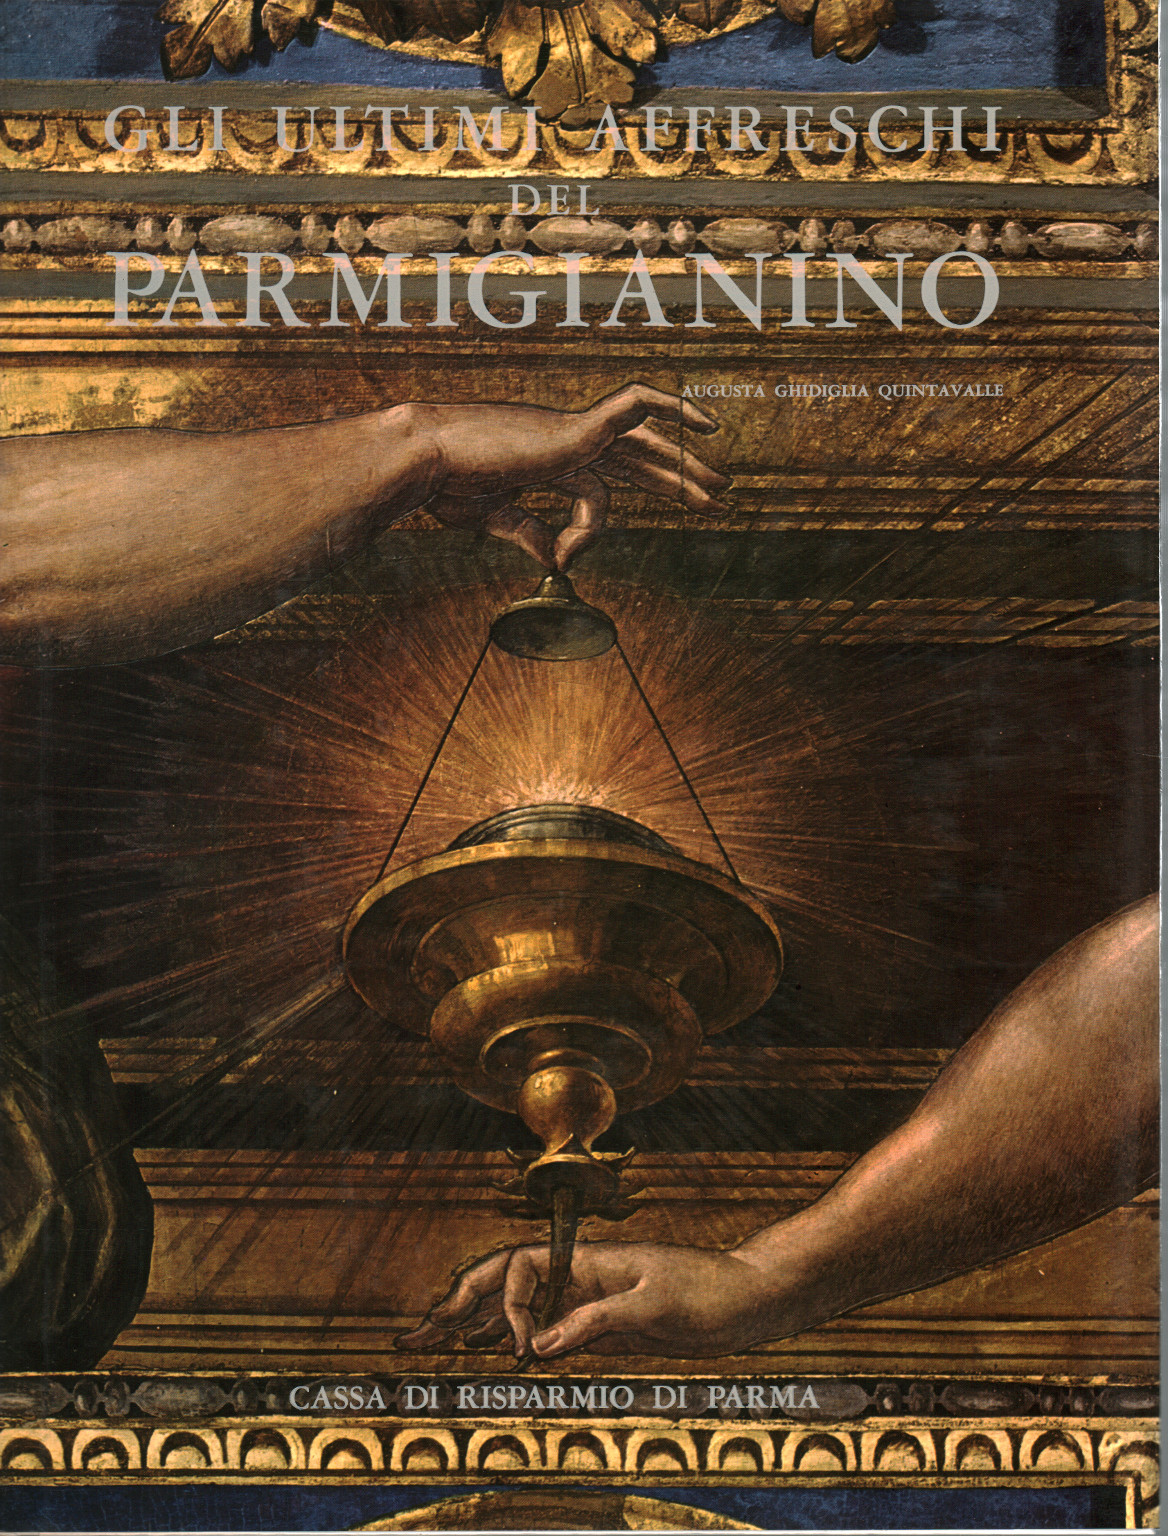 Les dernières fresques de Parmigianino, Augusta Ghidiglia Quintavalle